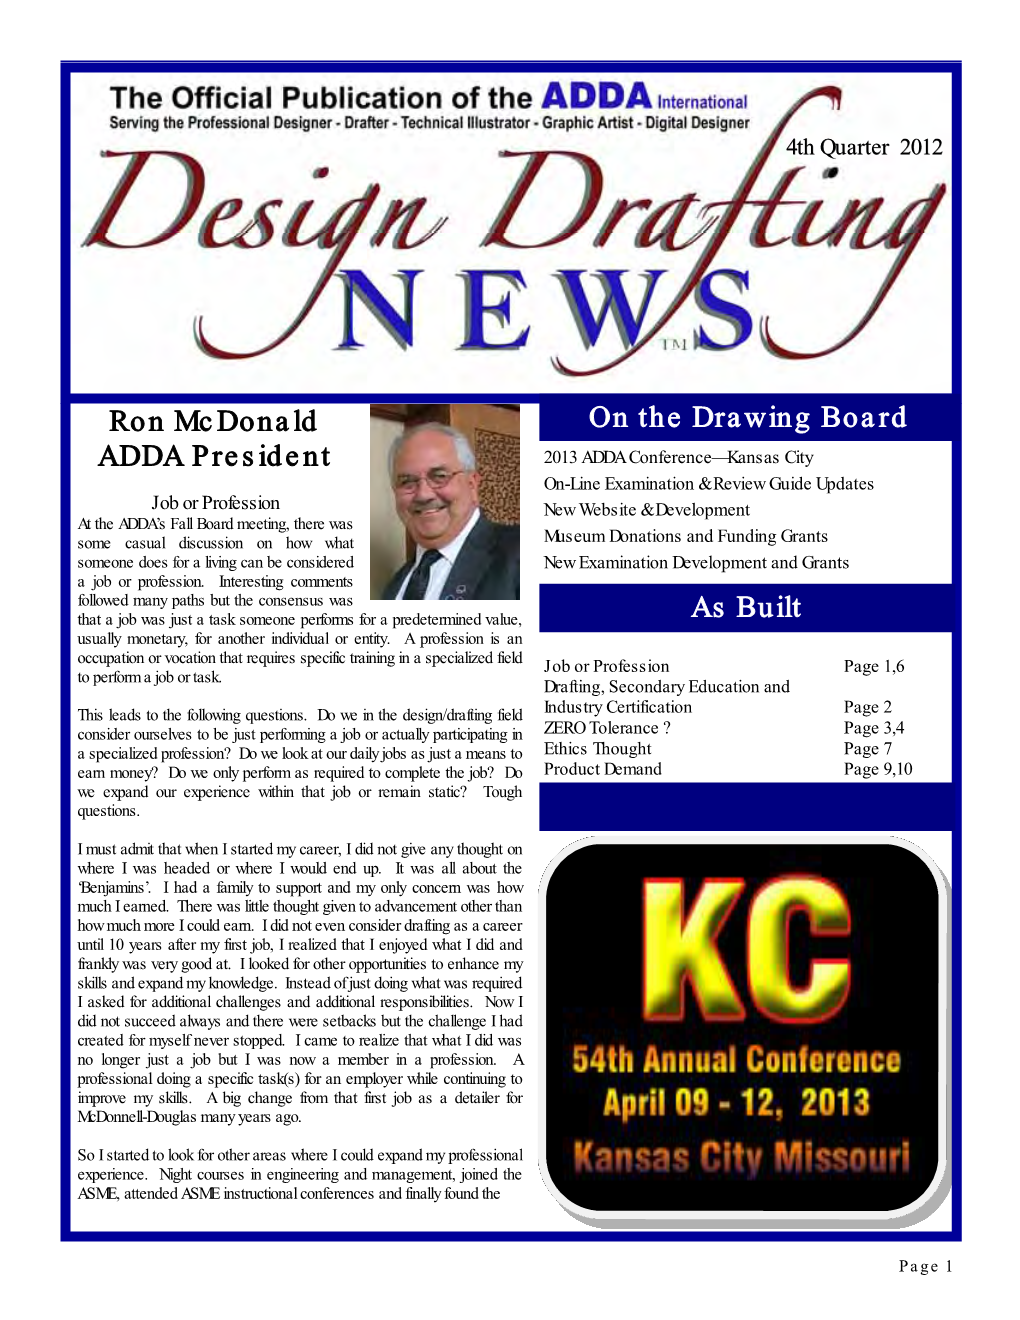 Ron Mcdonald ADDA President on the Drawing Board As Built